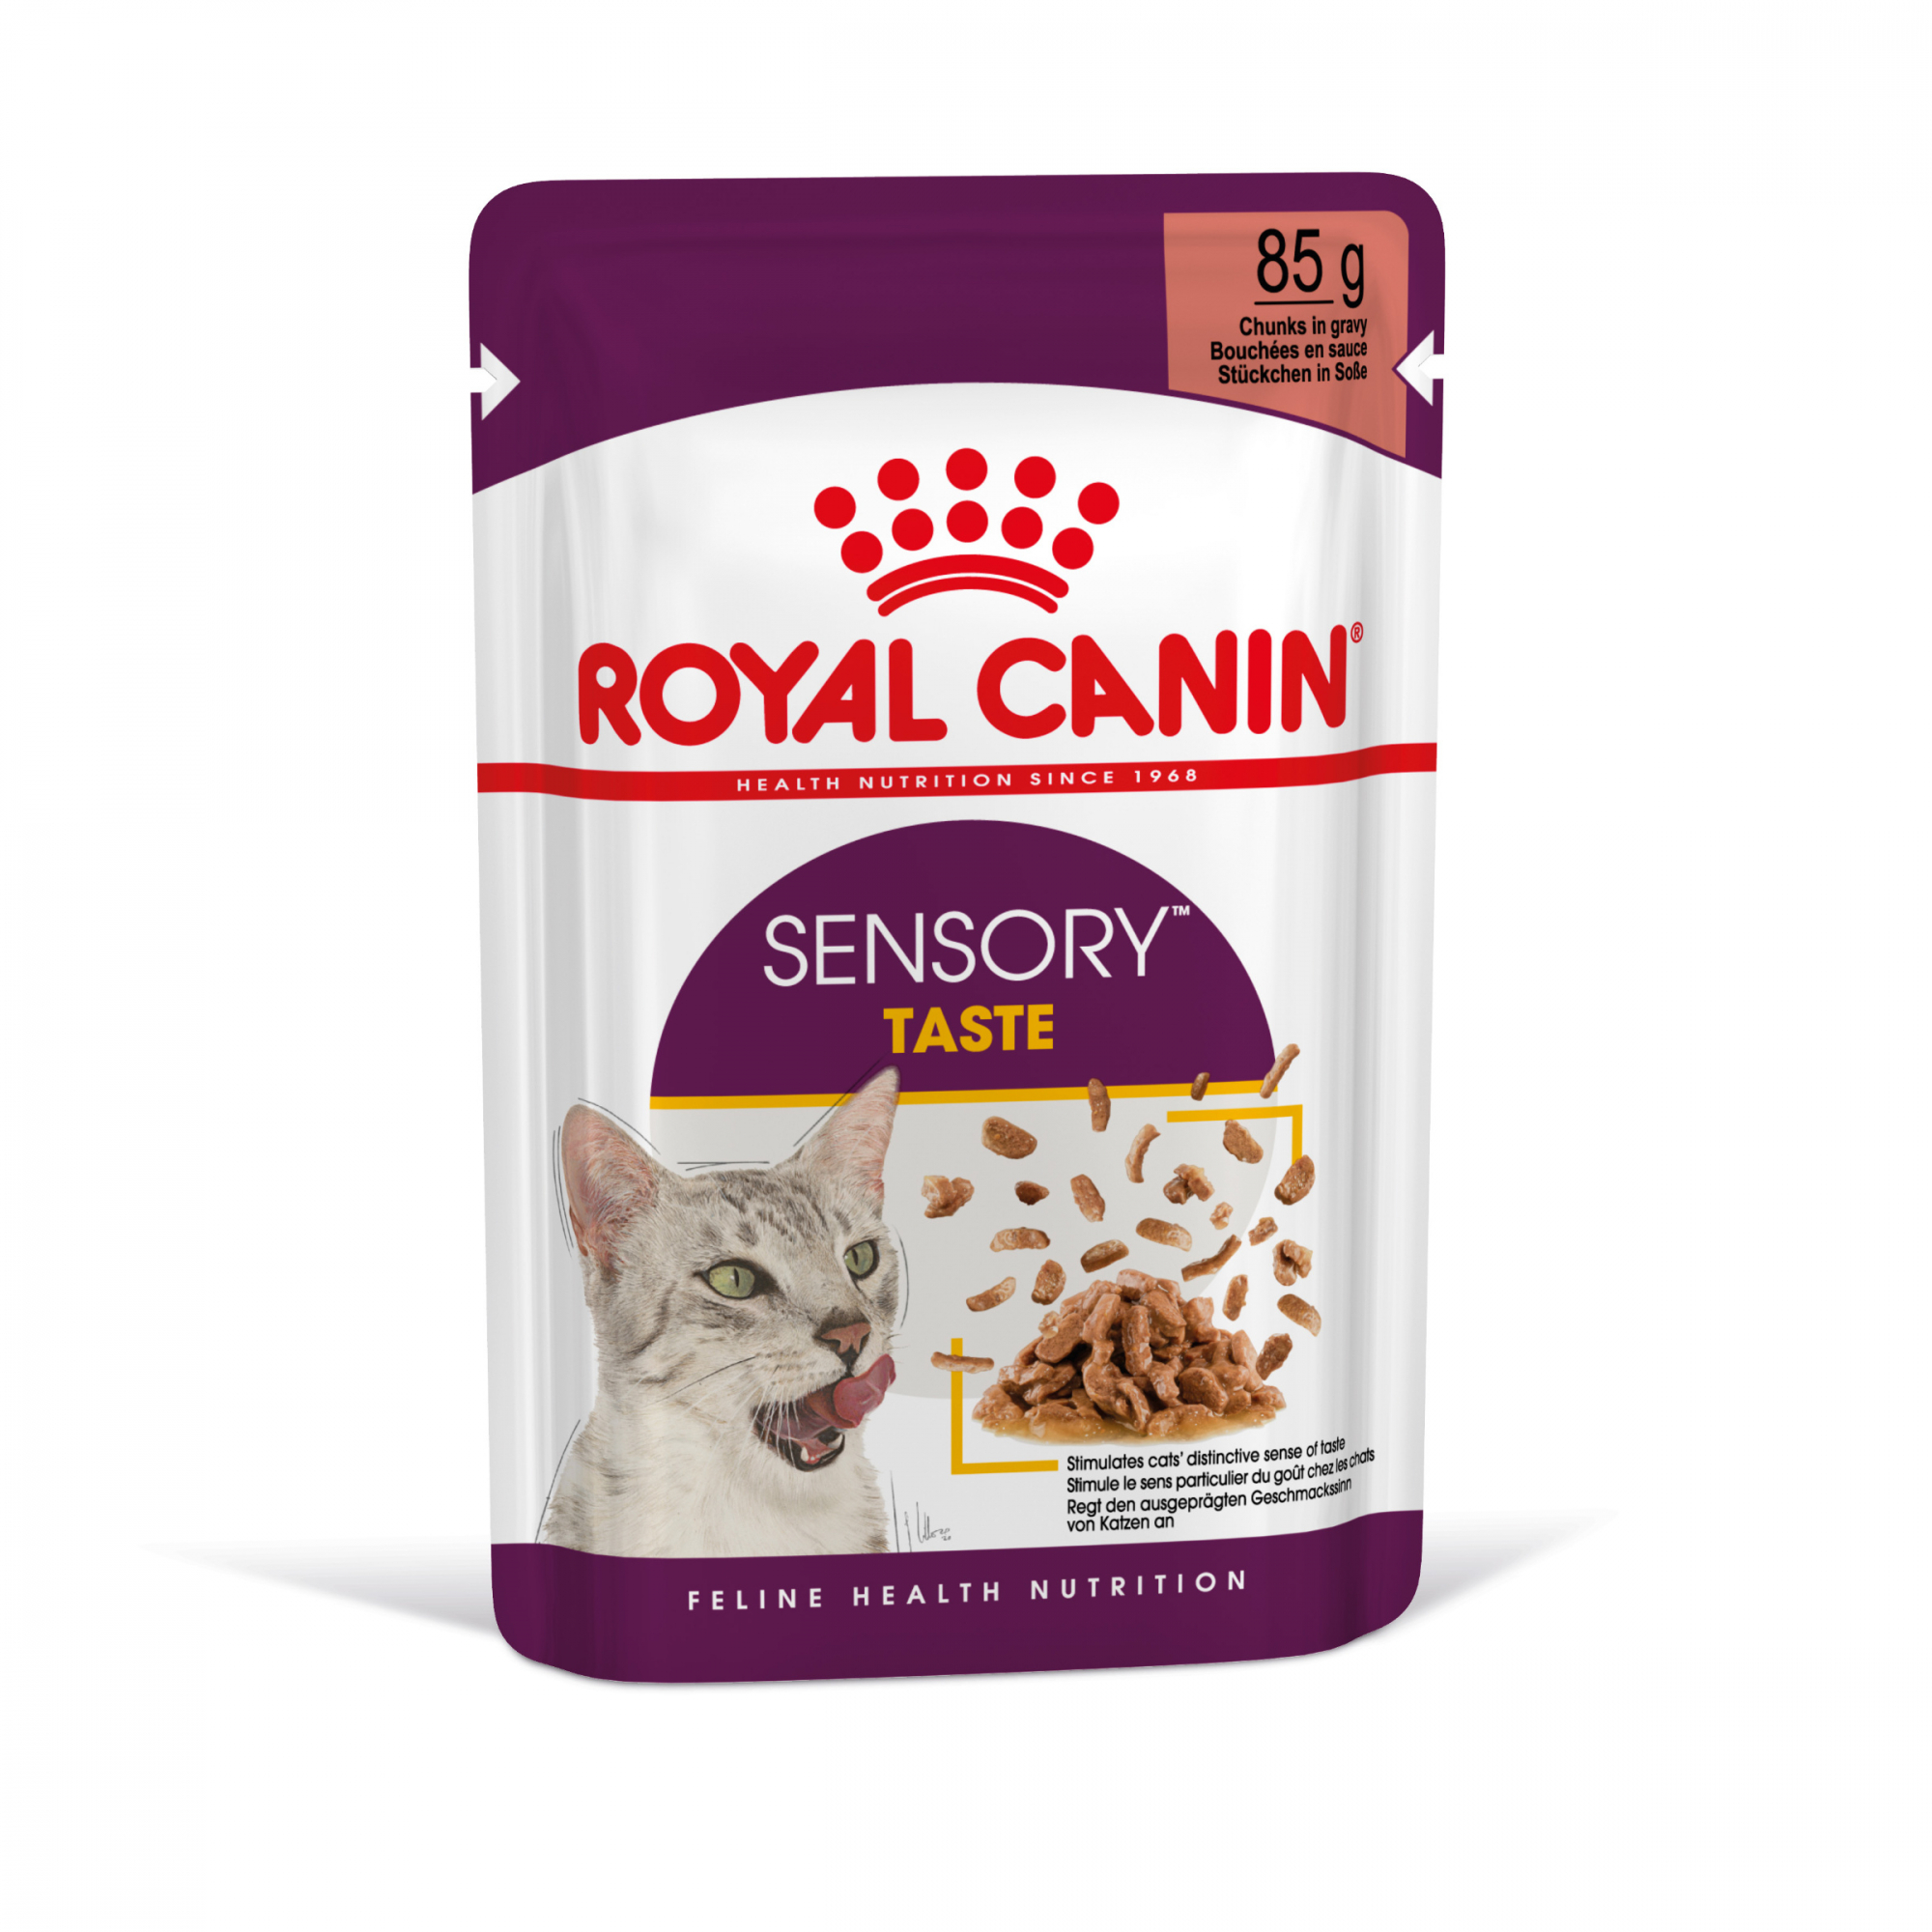 Royal Canin Sensory Taste patê em molho para gato